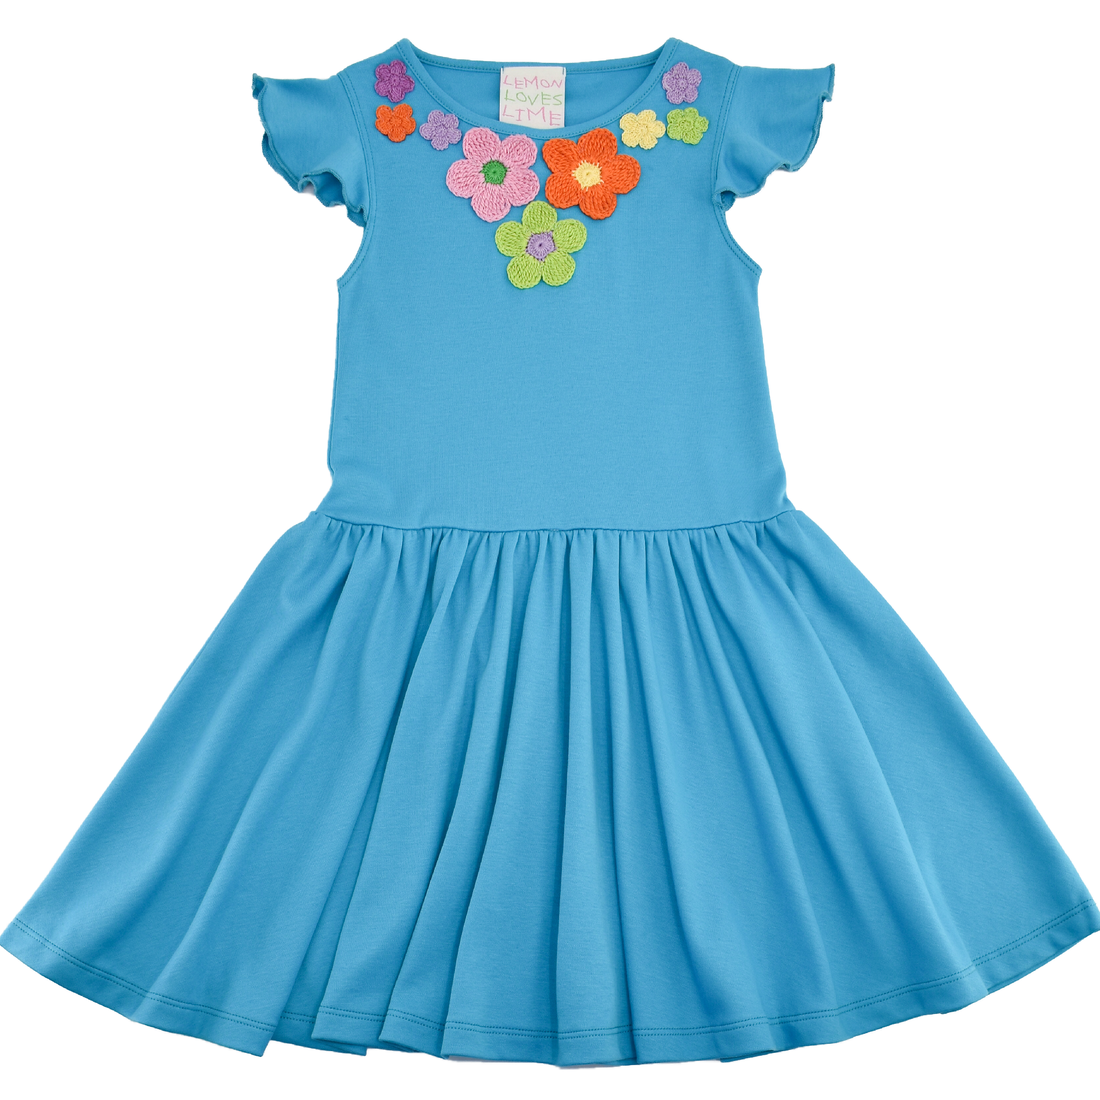 Spring Day Dress in Scuba Blue  - Doodlebug's Children's Boutique